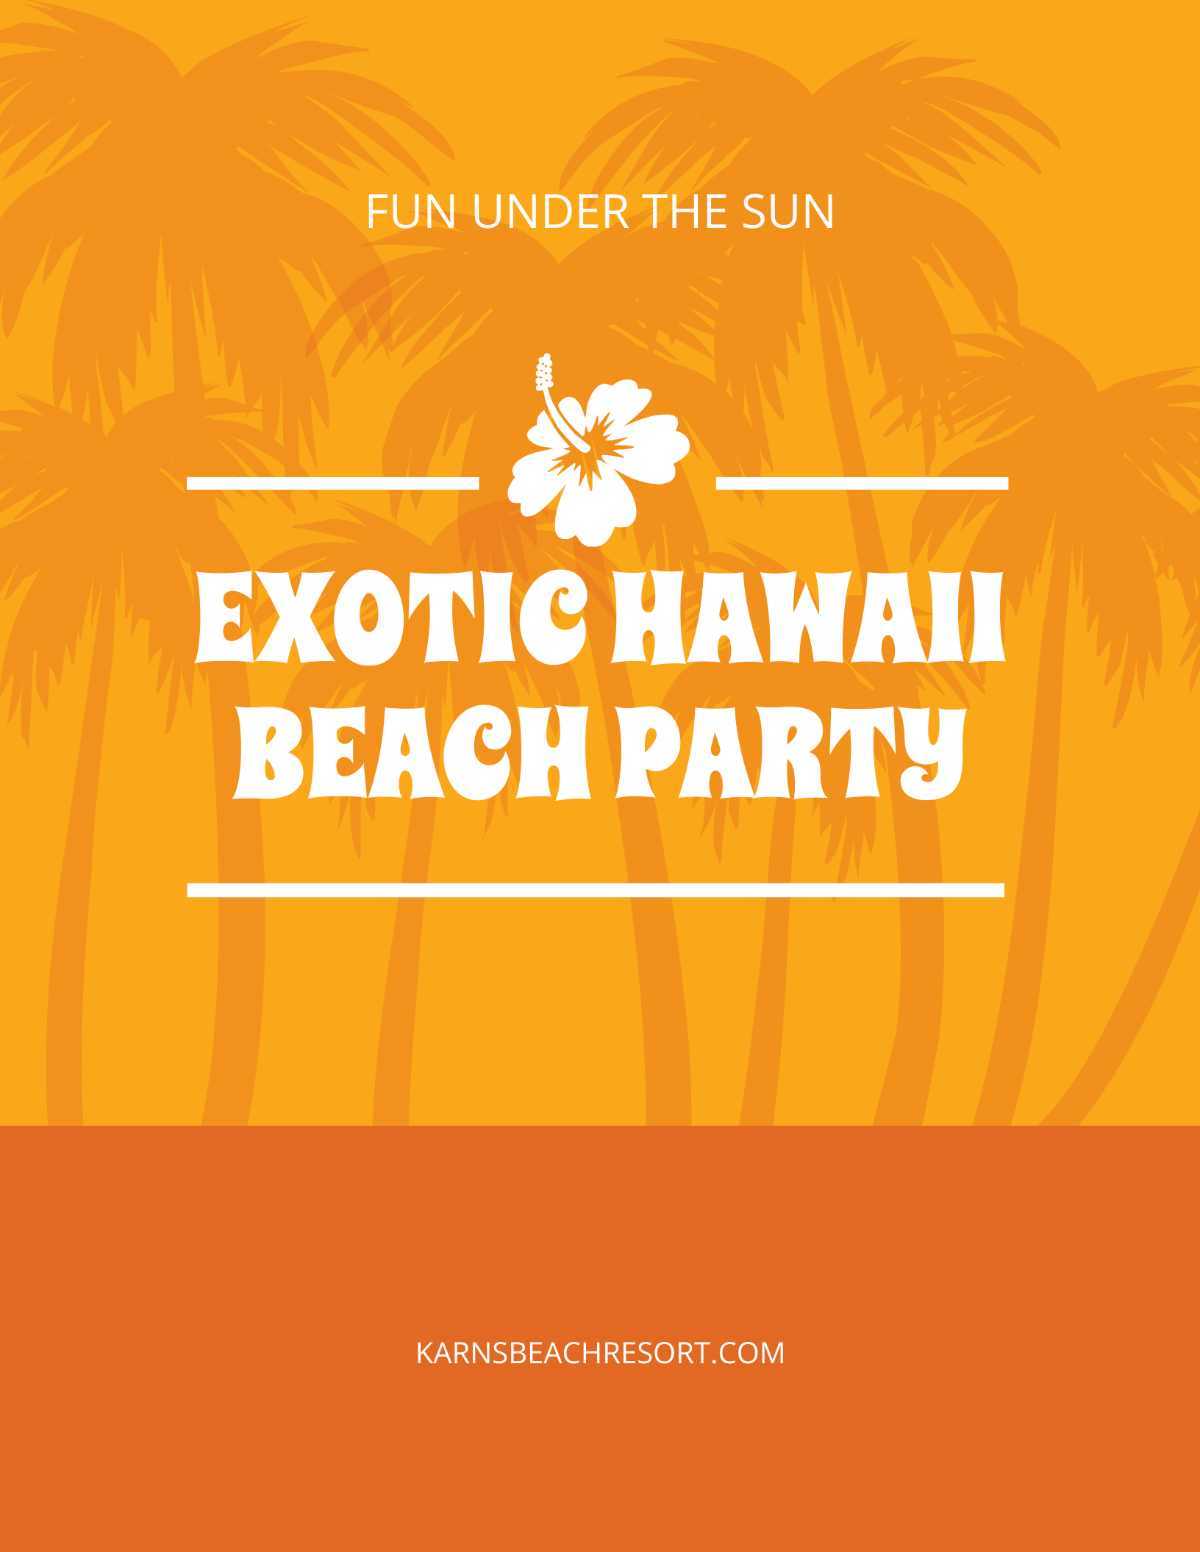 Hawaii Beach Party Flyer